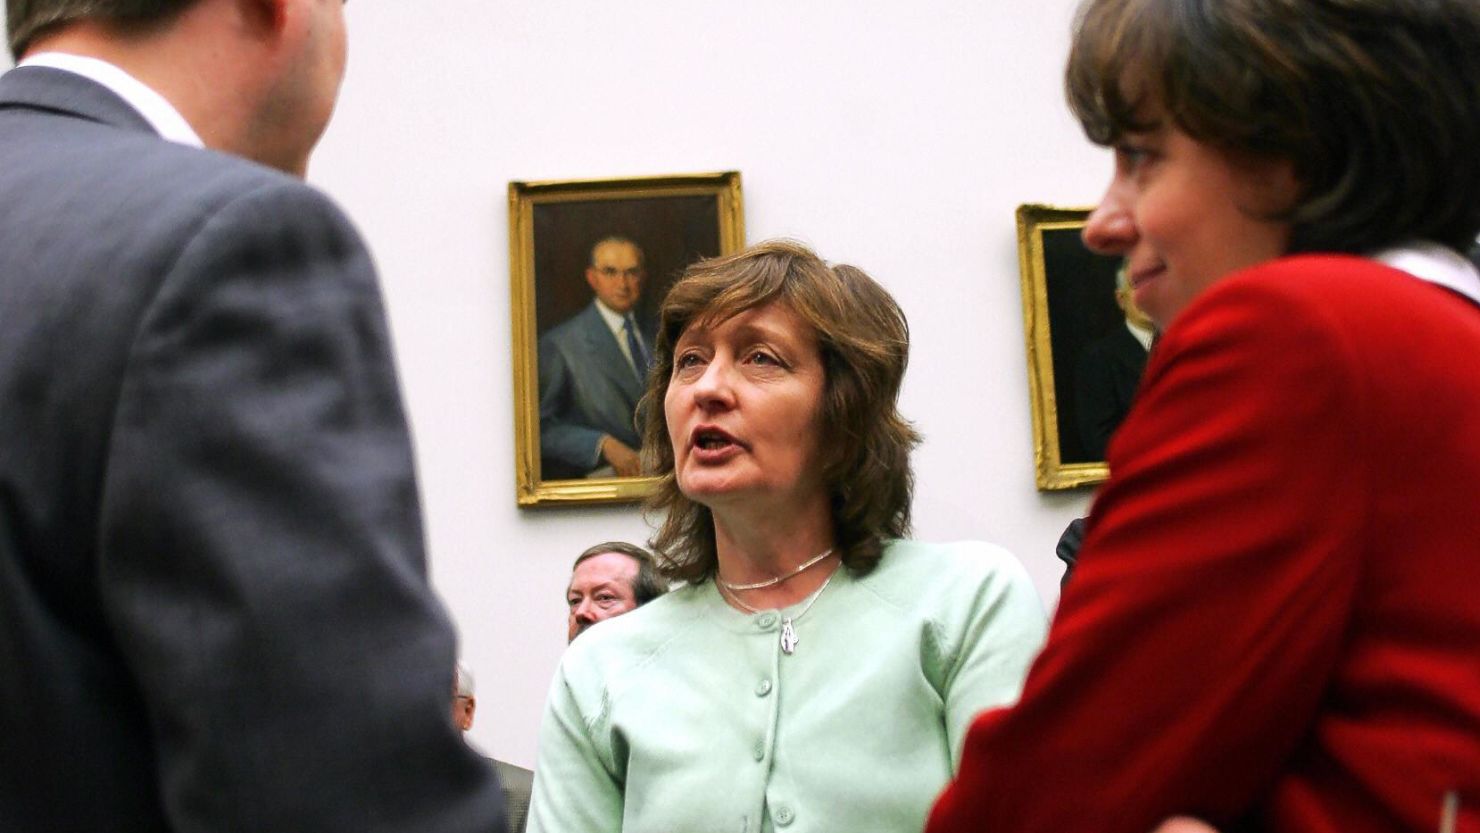 Geraldine Finucane (C), wife of slain Irish human rights attorney Patrick Finucane, speaks with collegues 16 March, 2005 in Washington D.C.